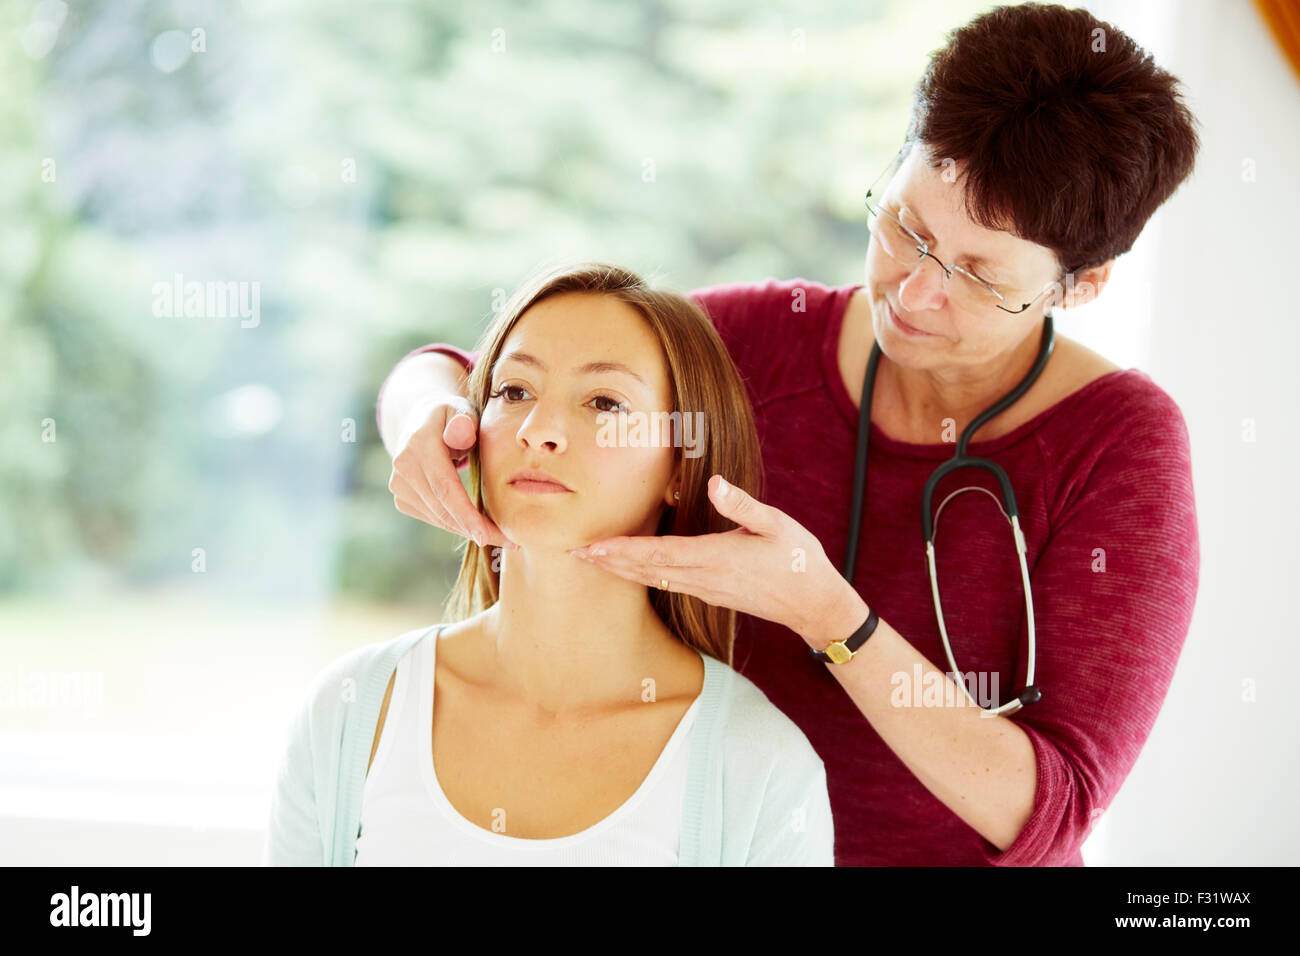 Doctor examining patient Stock Photo